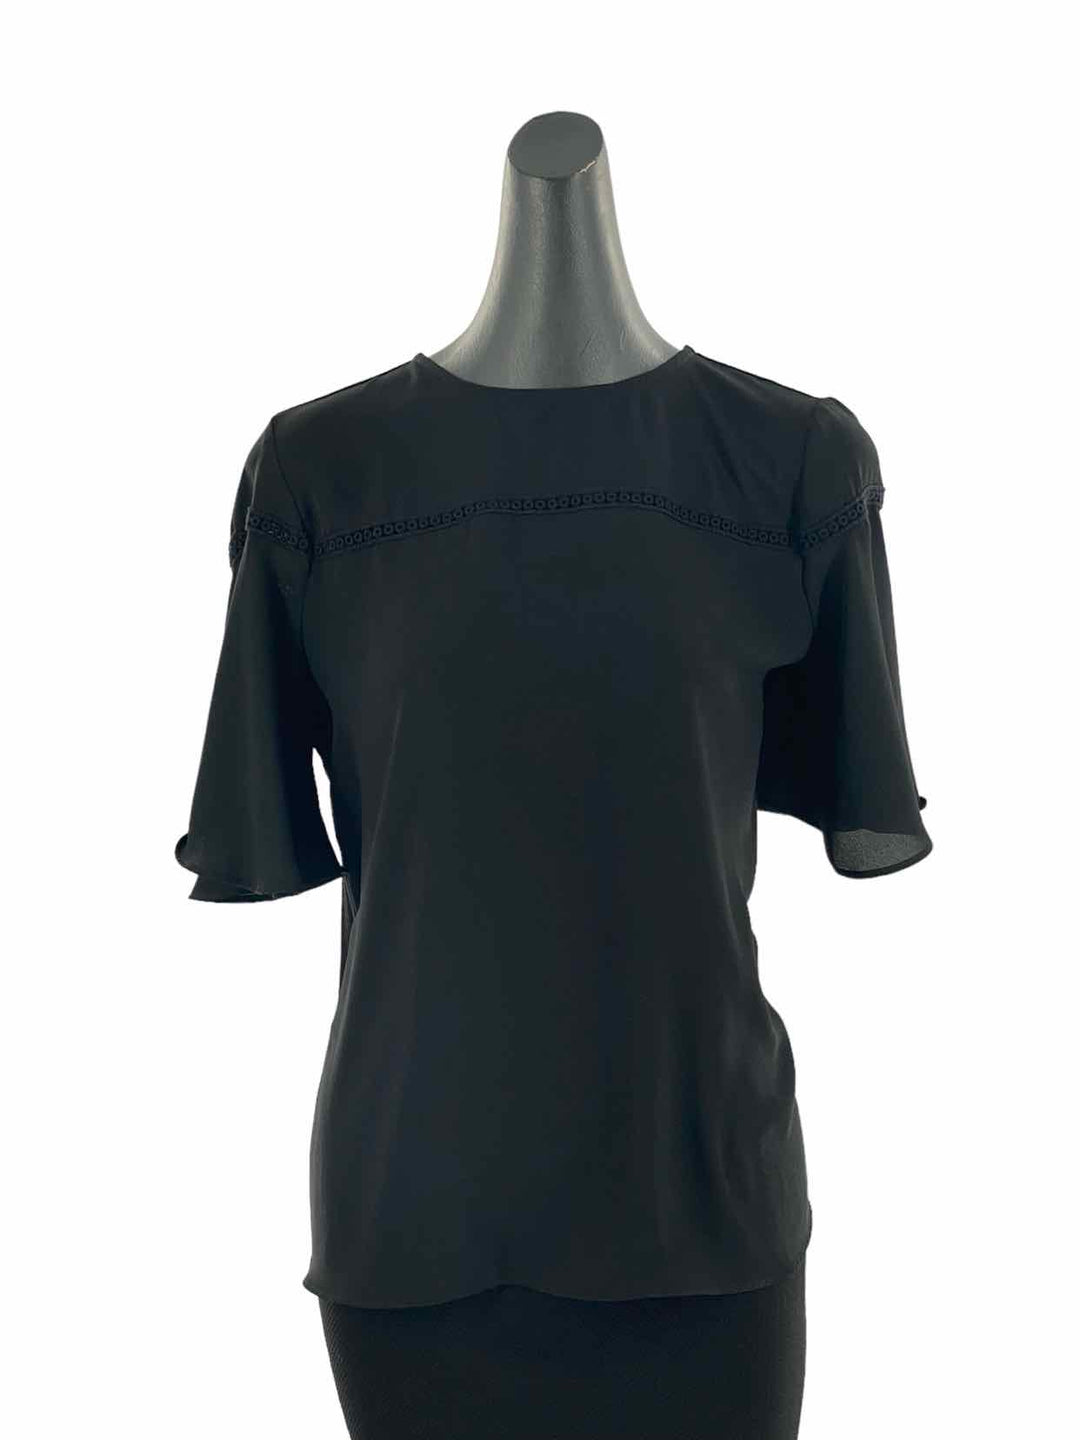 Loft Size S Black Short Sleeve Shirts